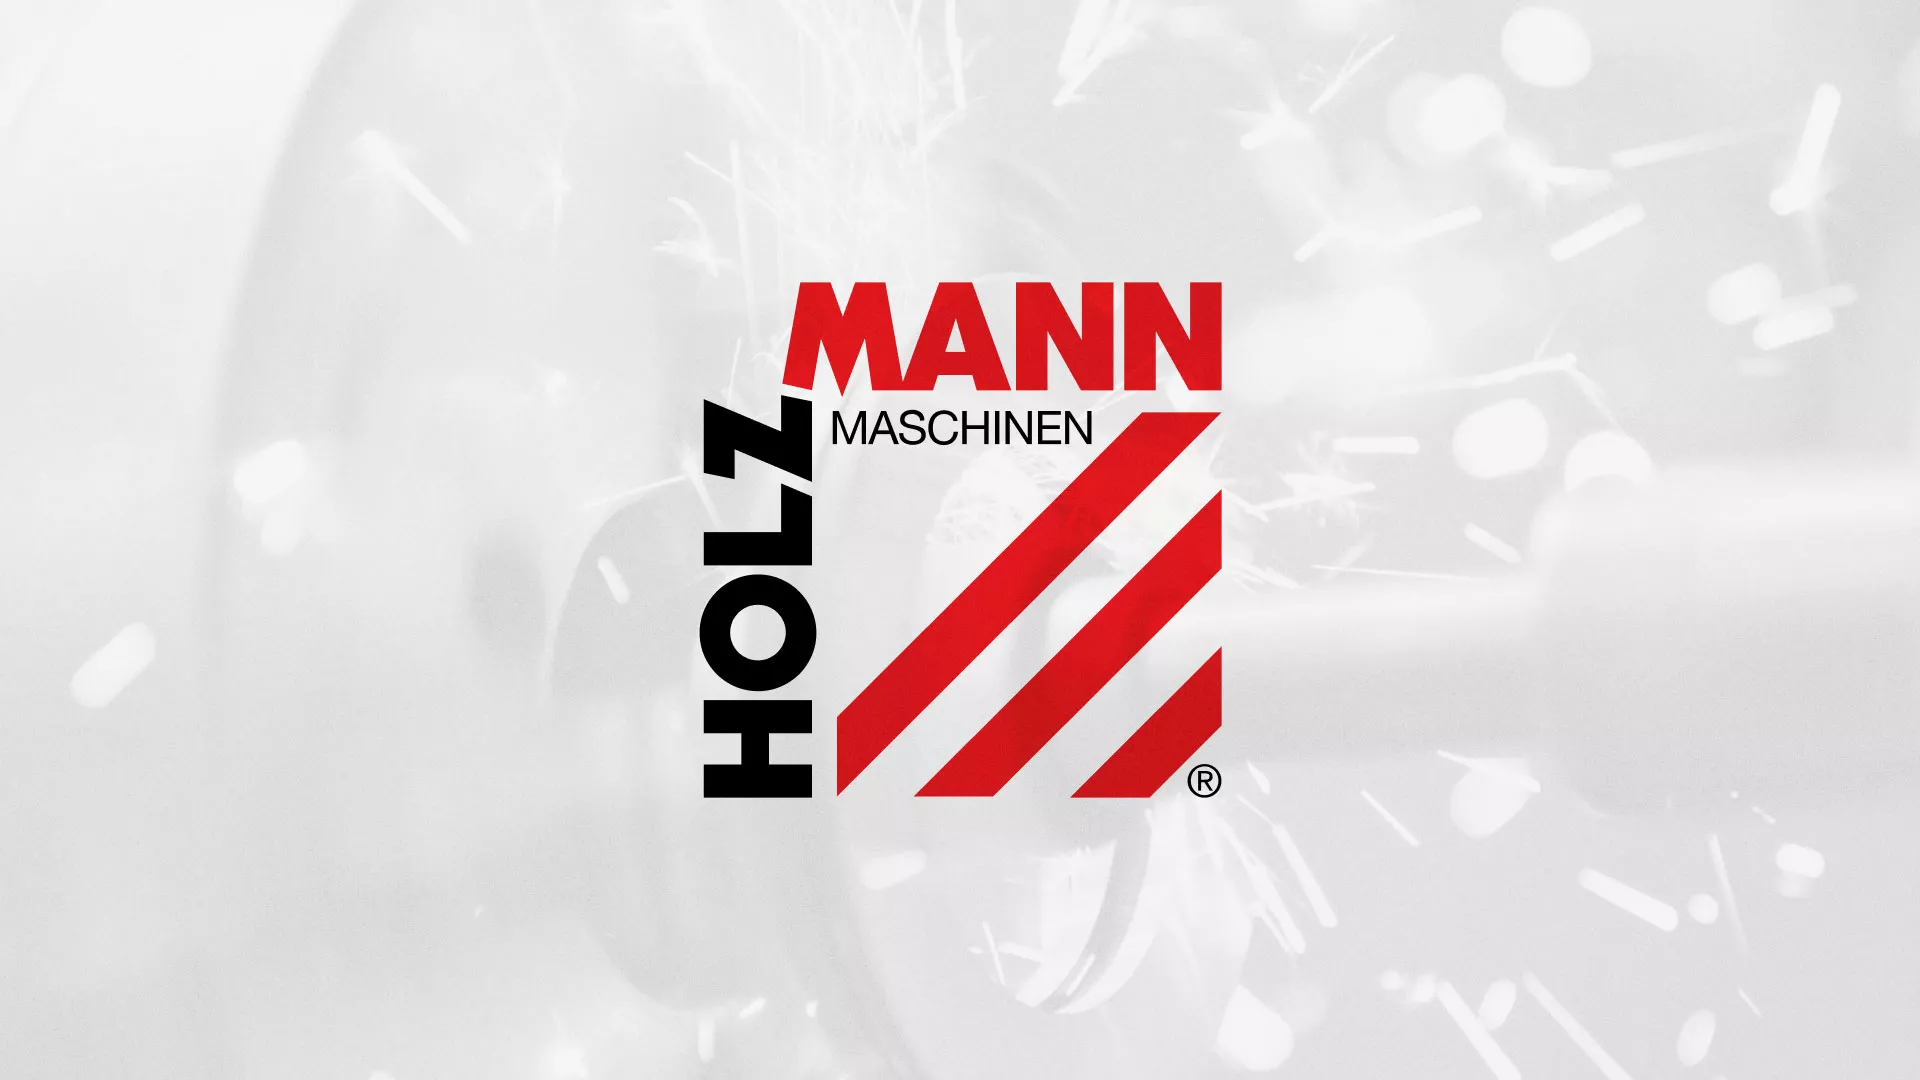 Создание сайта компании «HOLZMANN Maschinen GmbH» в Демидове